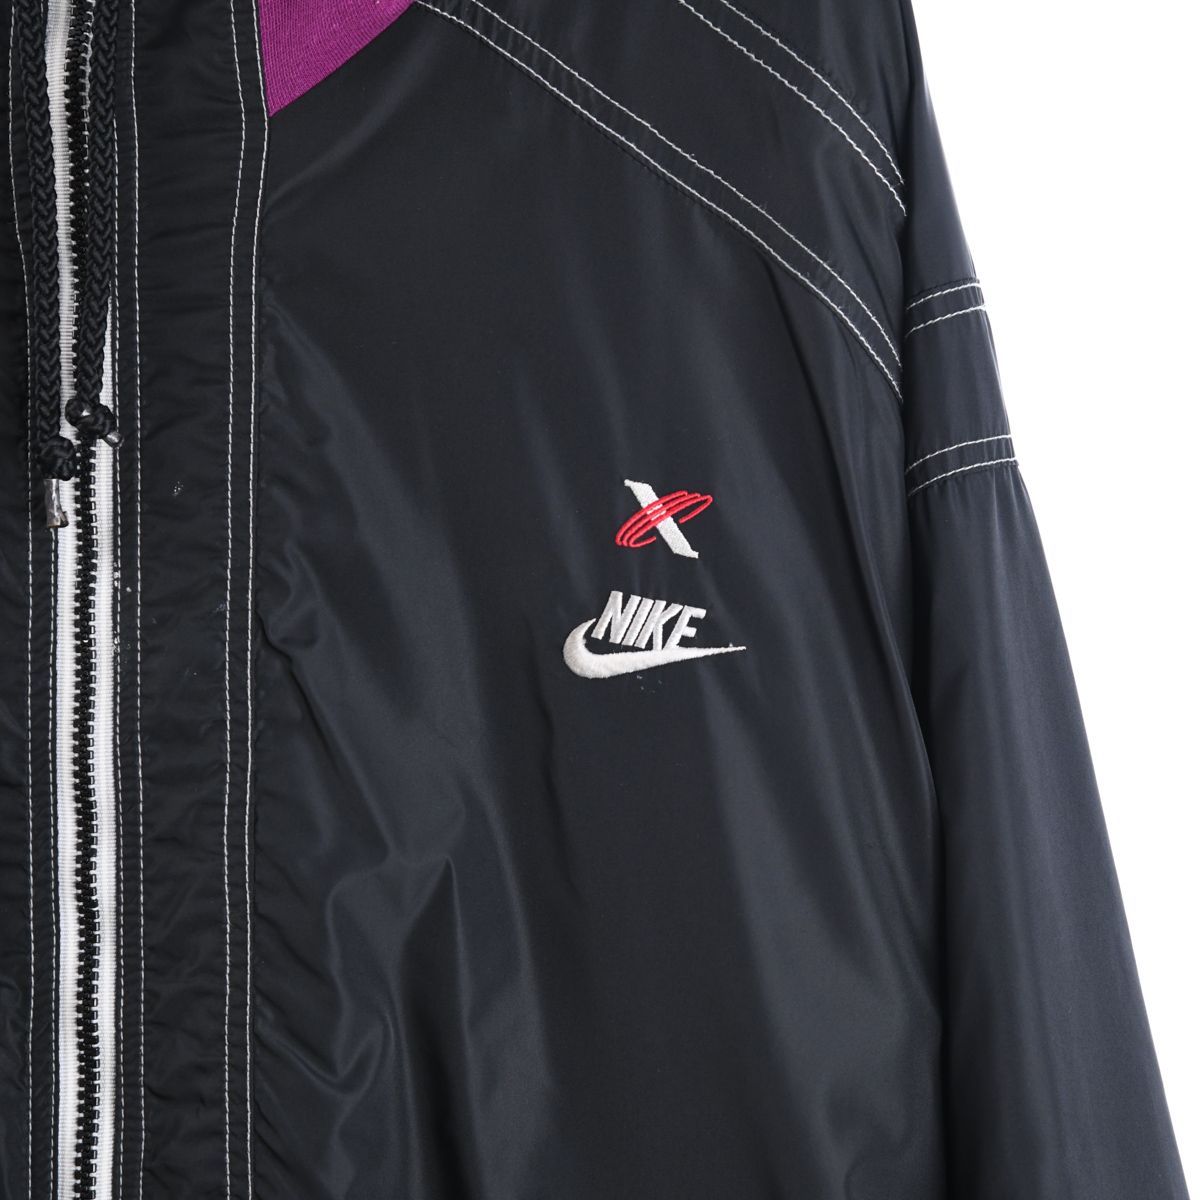 Nike Late 1990s Jacket